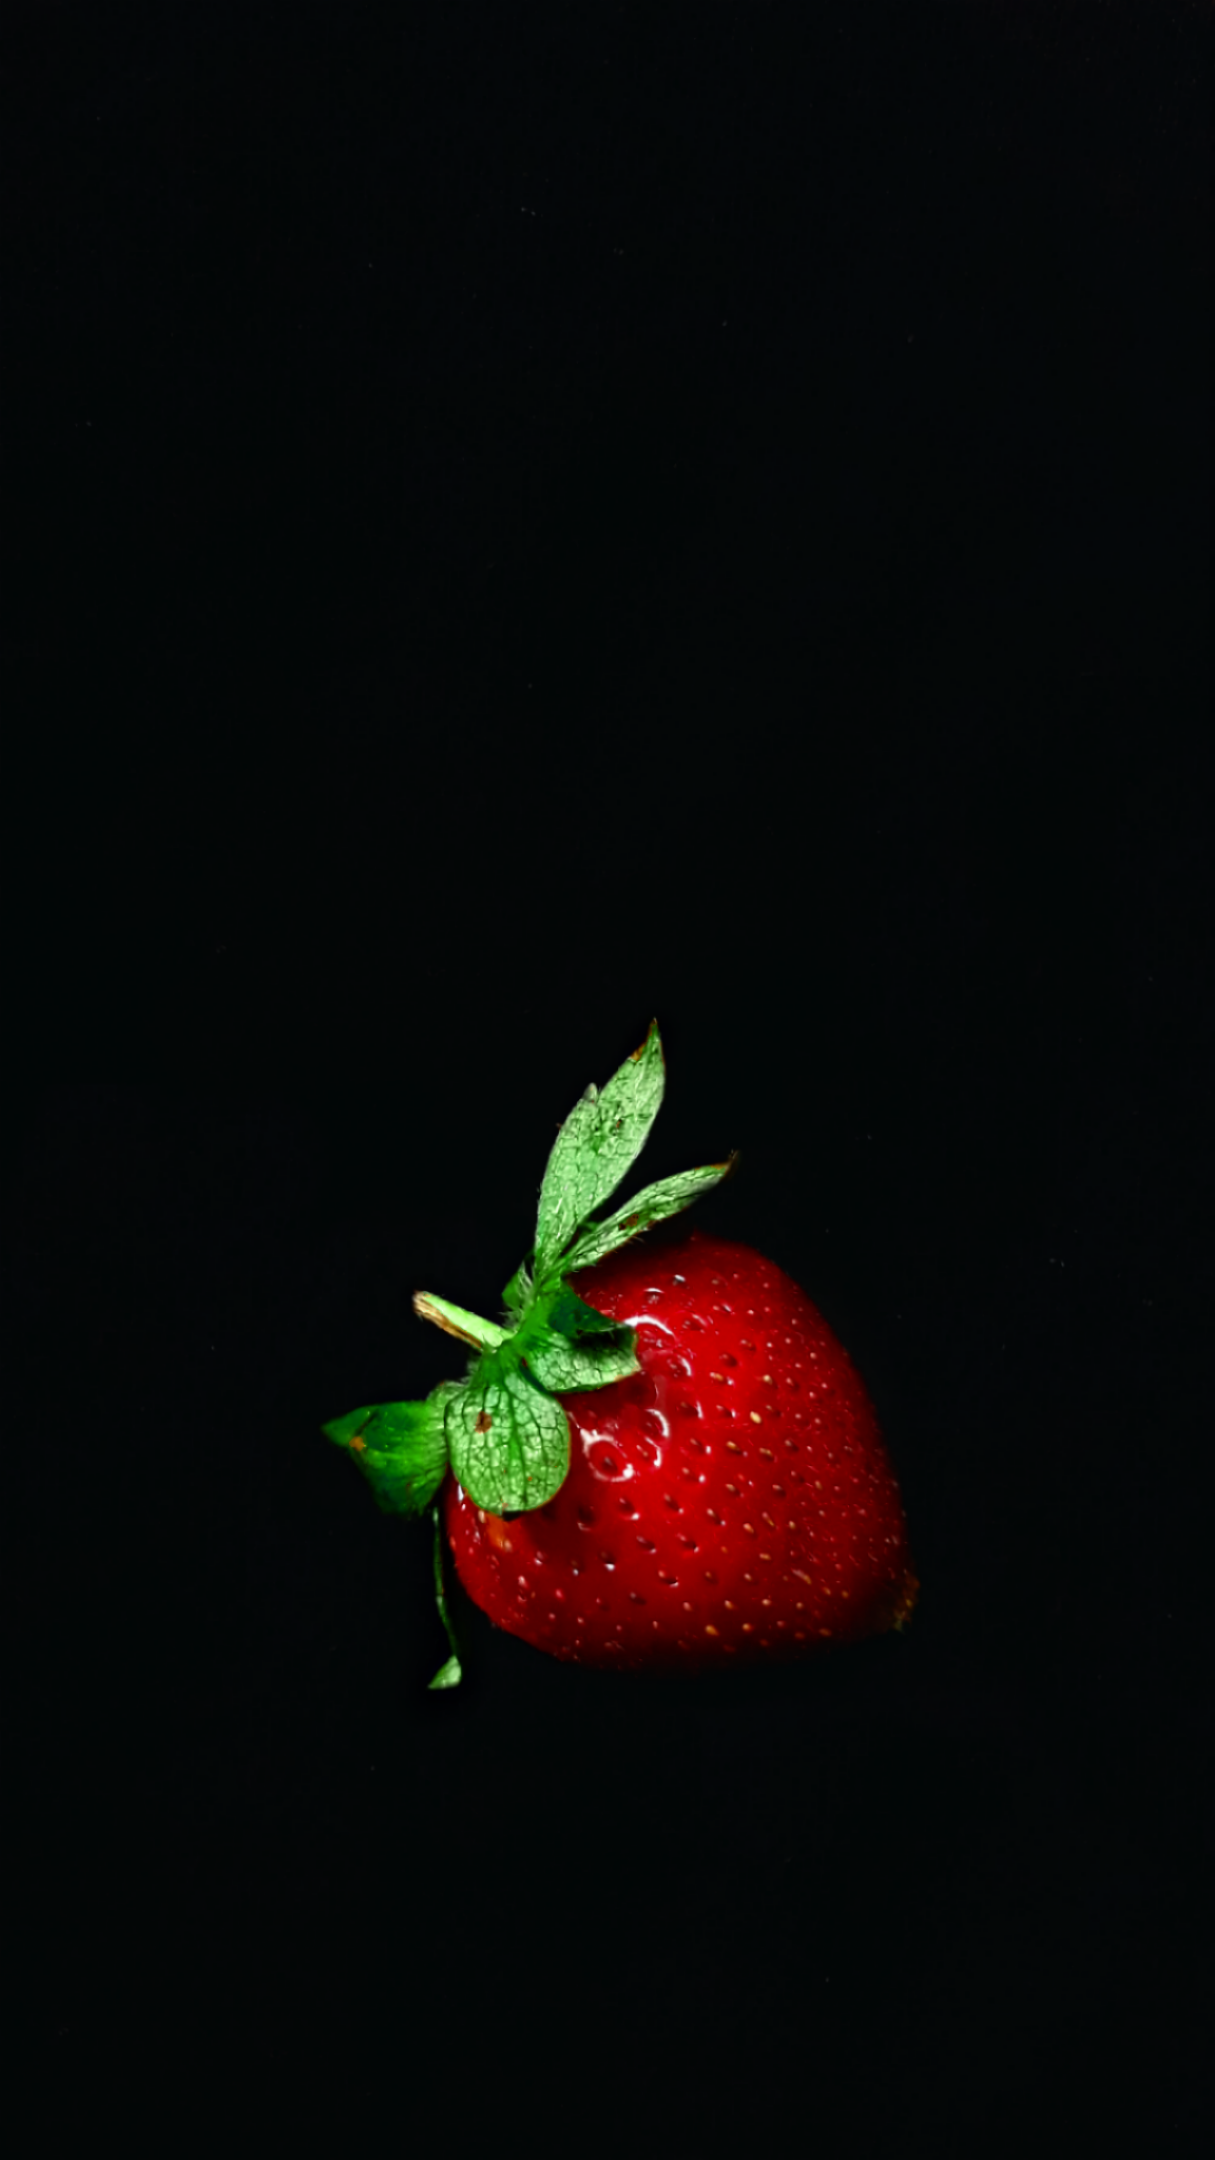 General 1215x2160 dark background strawberries food minimalism simple background fruit red